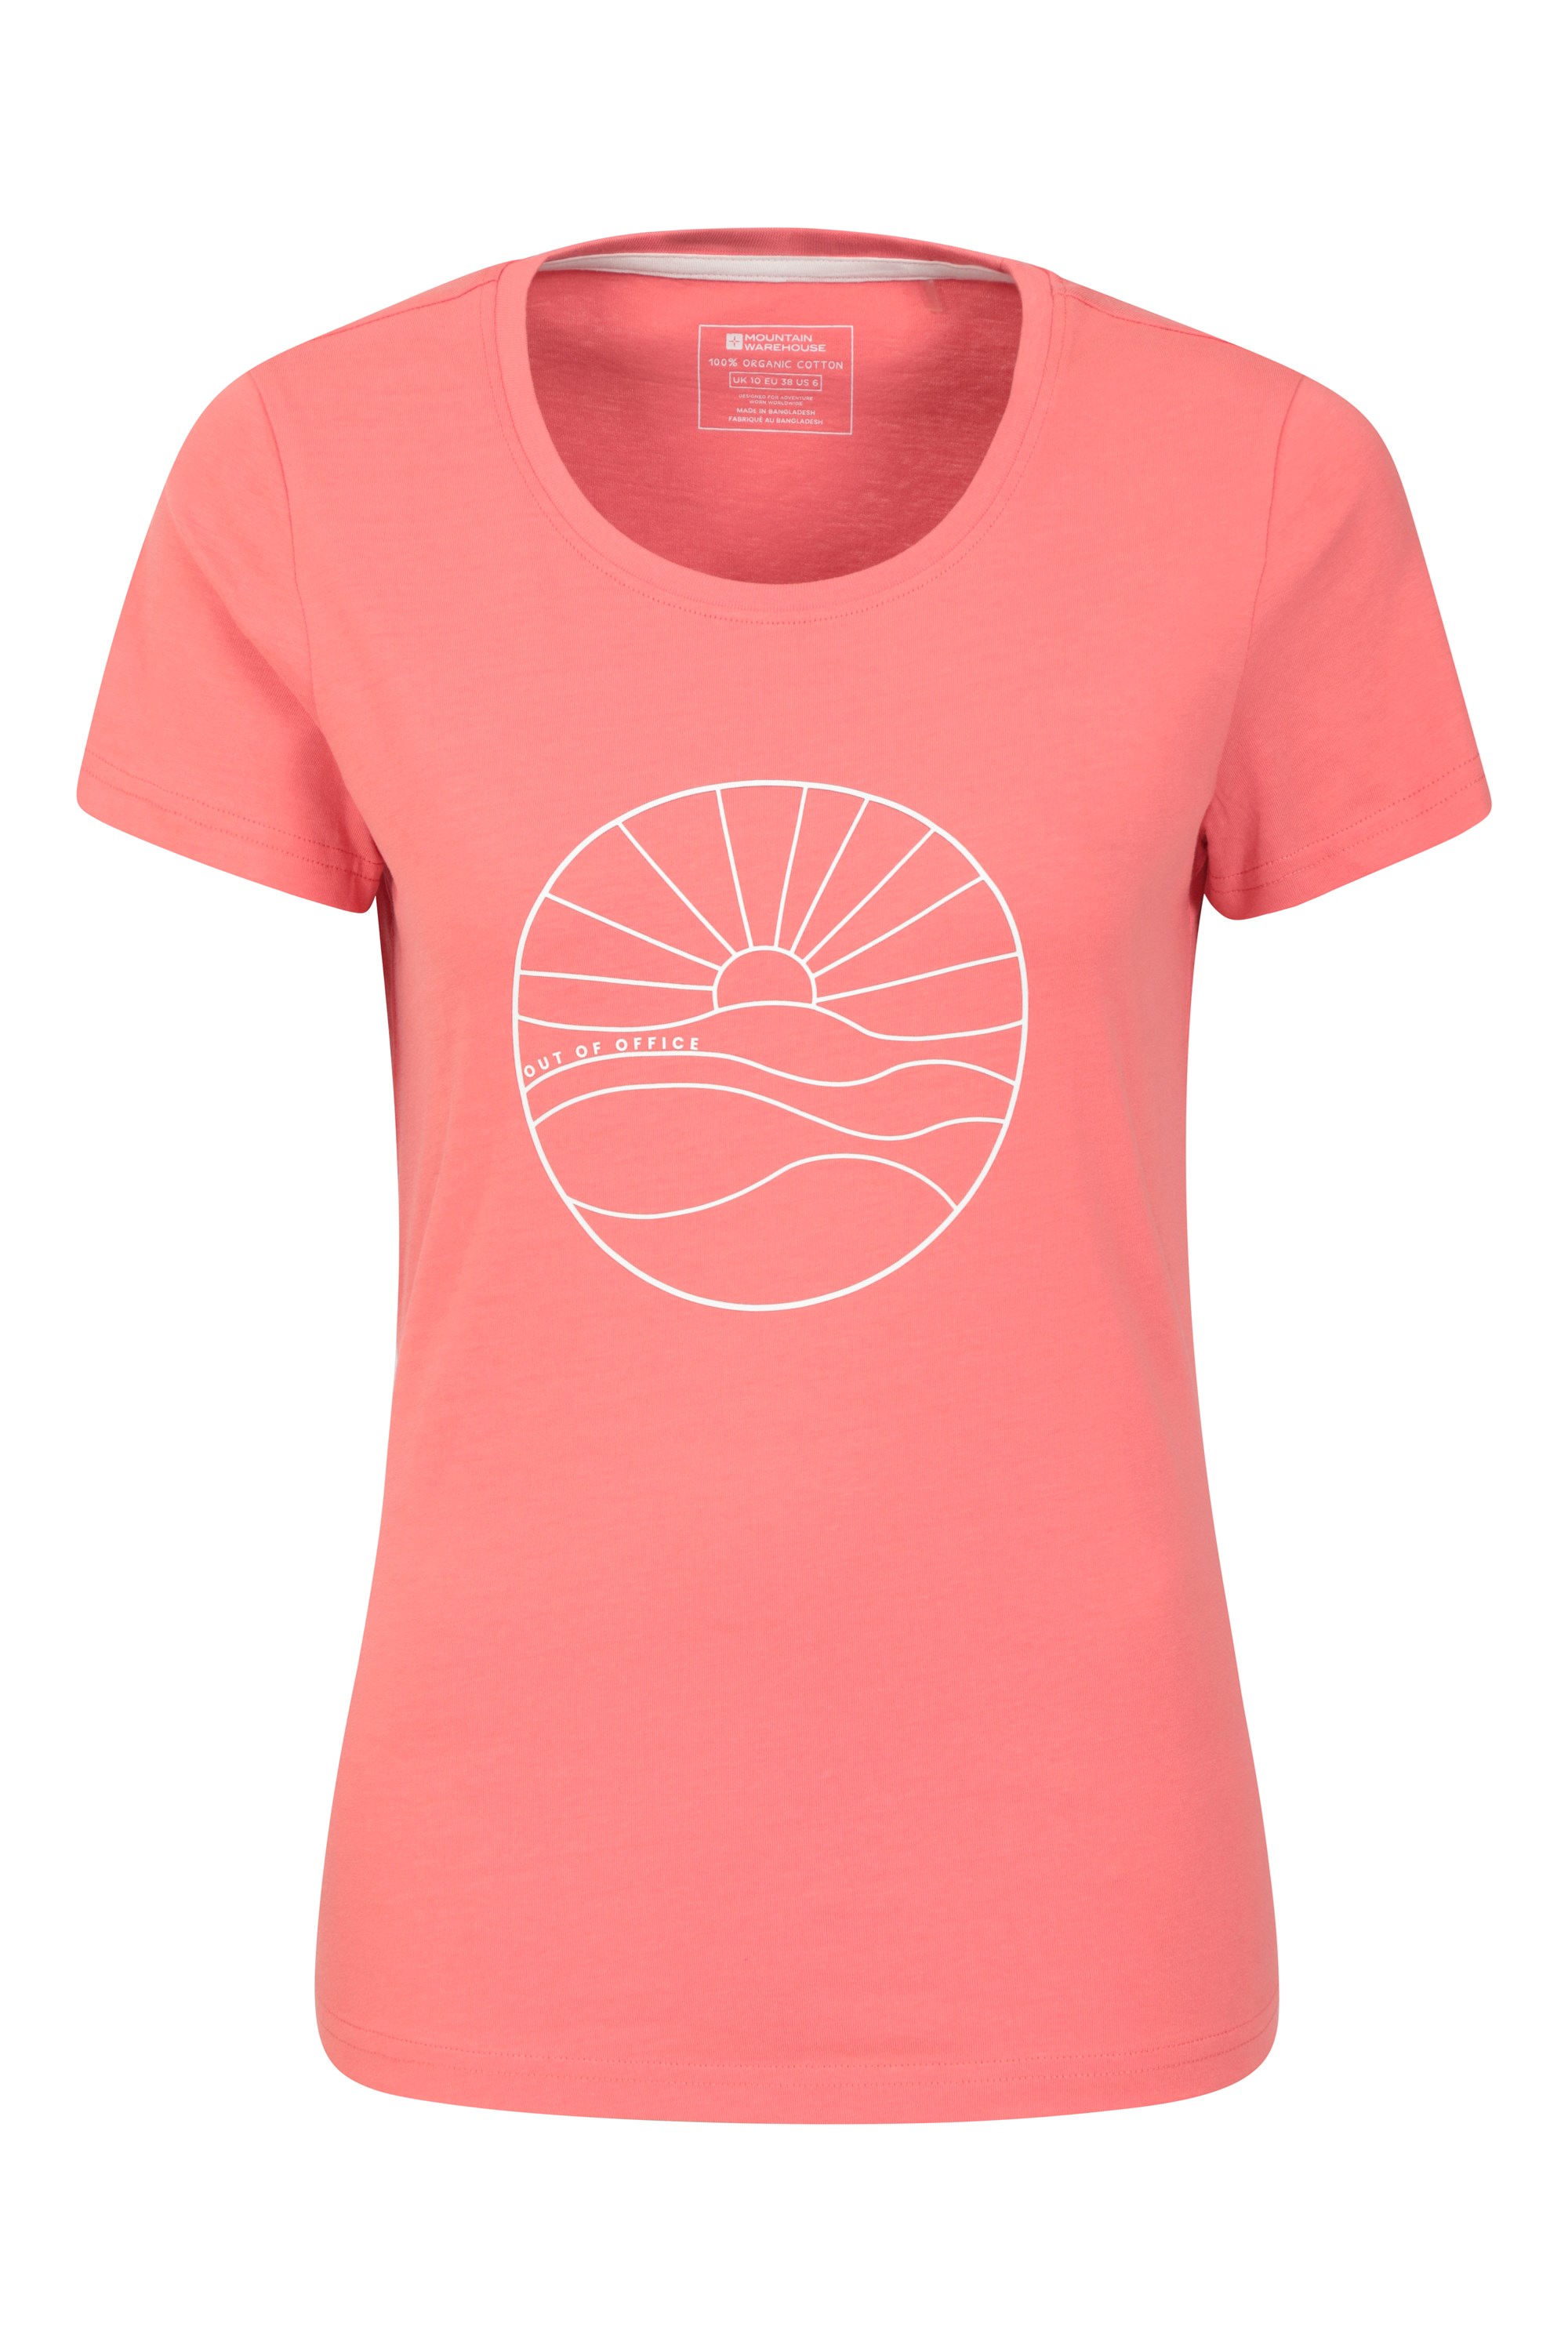 „Out Of Office” (Poza biurem) damska organiczna koszulka - Pink